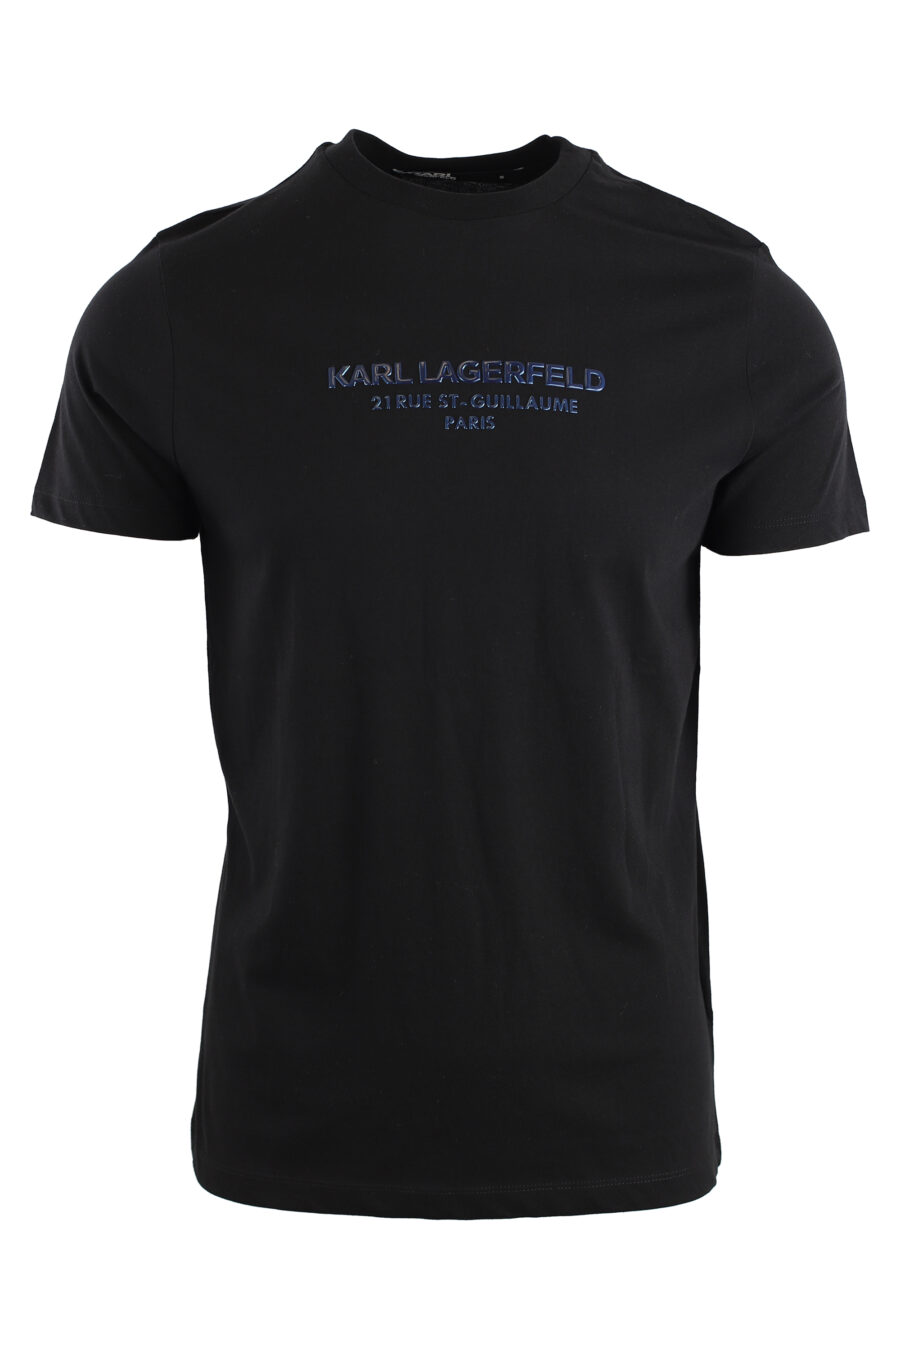 Camiseta negra con logo azul metalizado - IMG 7550